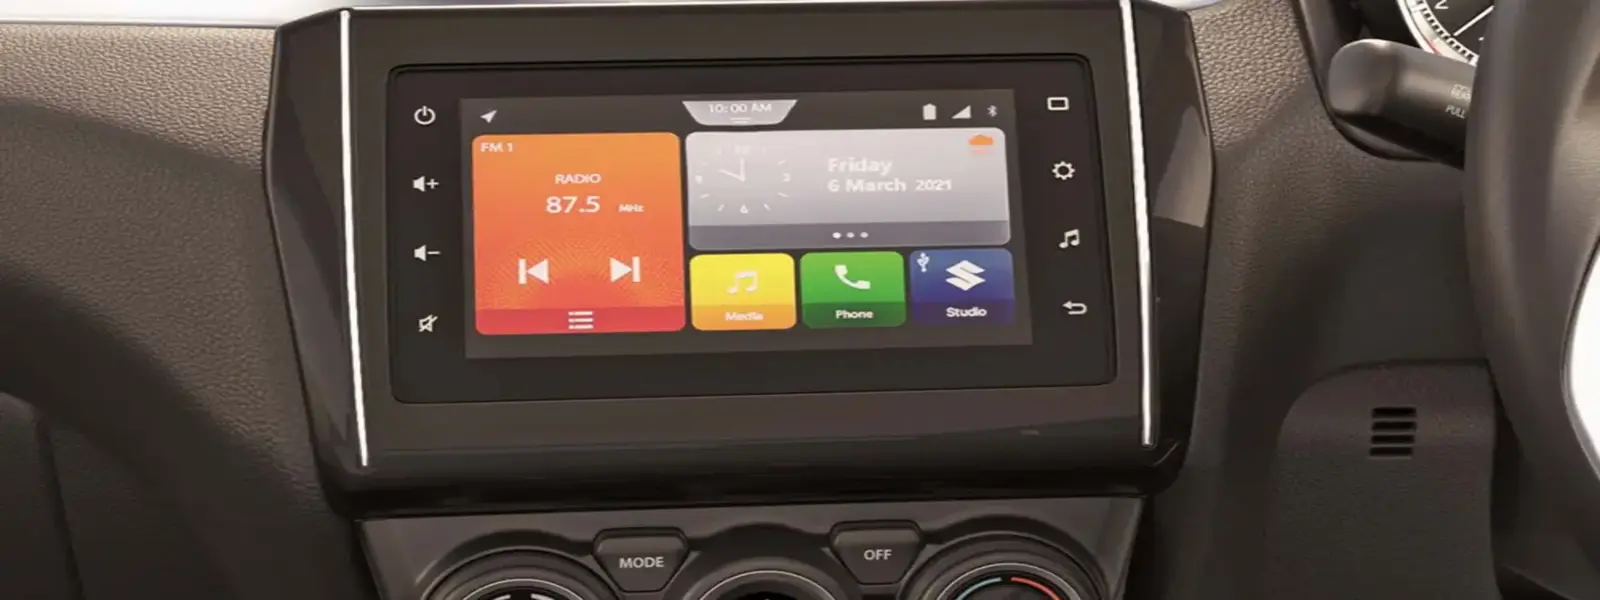 Swift- SmartPlay Infotainment System GIG Motors Edenthar, Aizawl